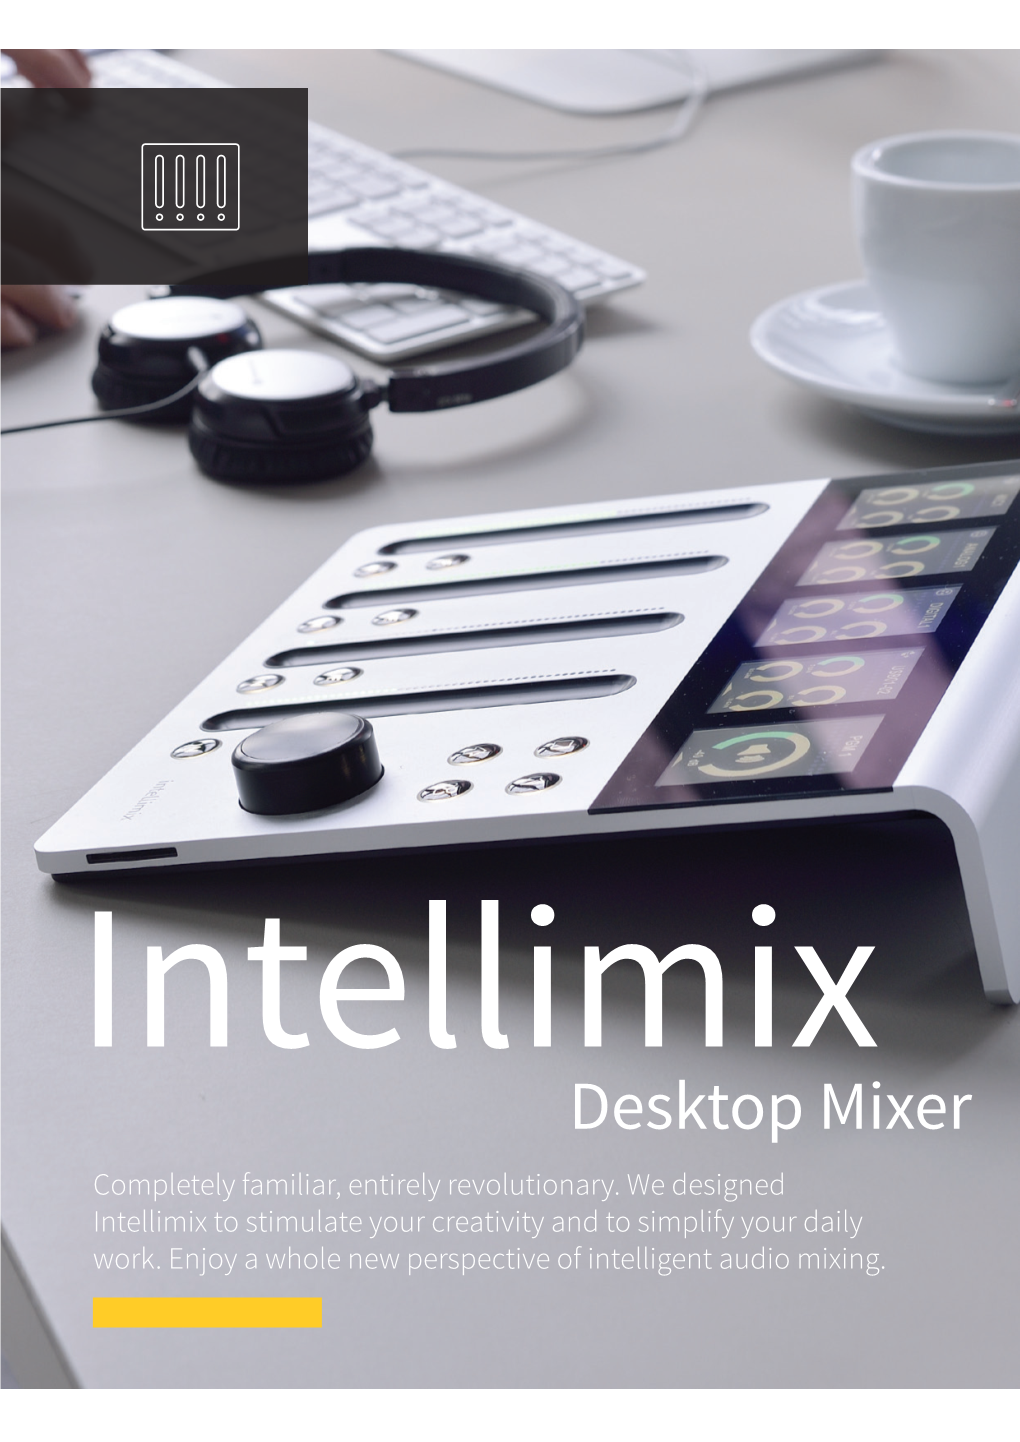 Desktop Mixer Completely Familiar, Entirely Revolutionary